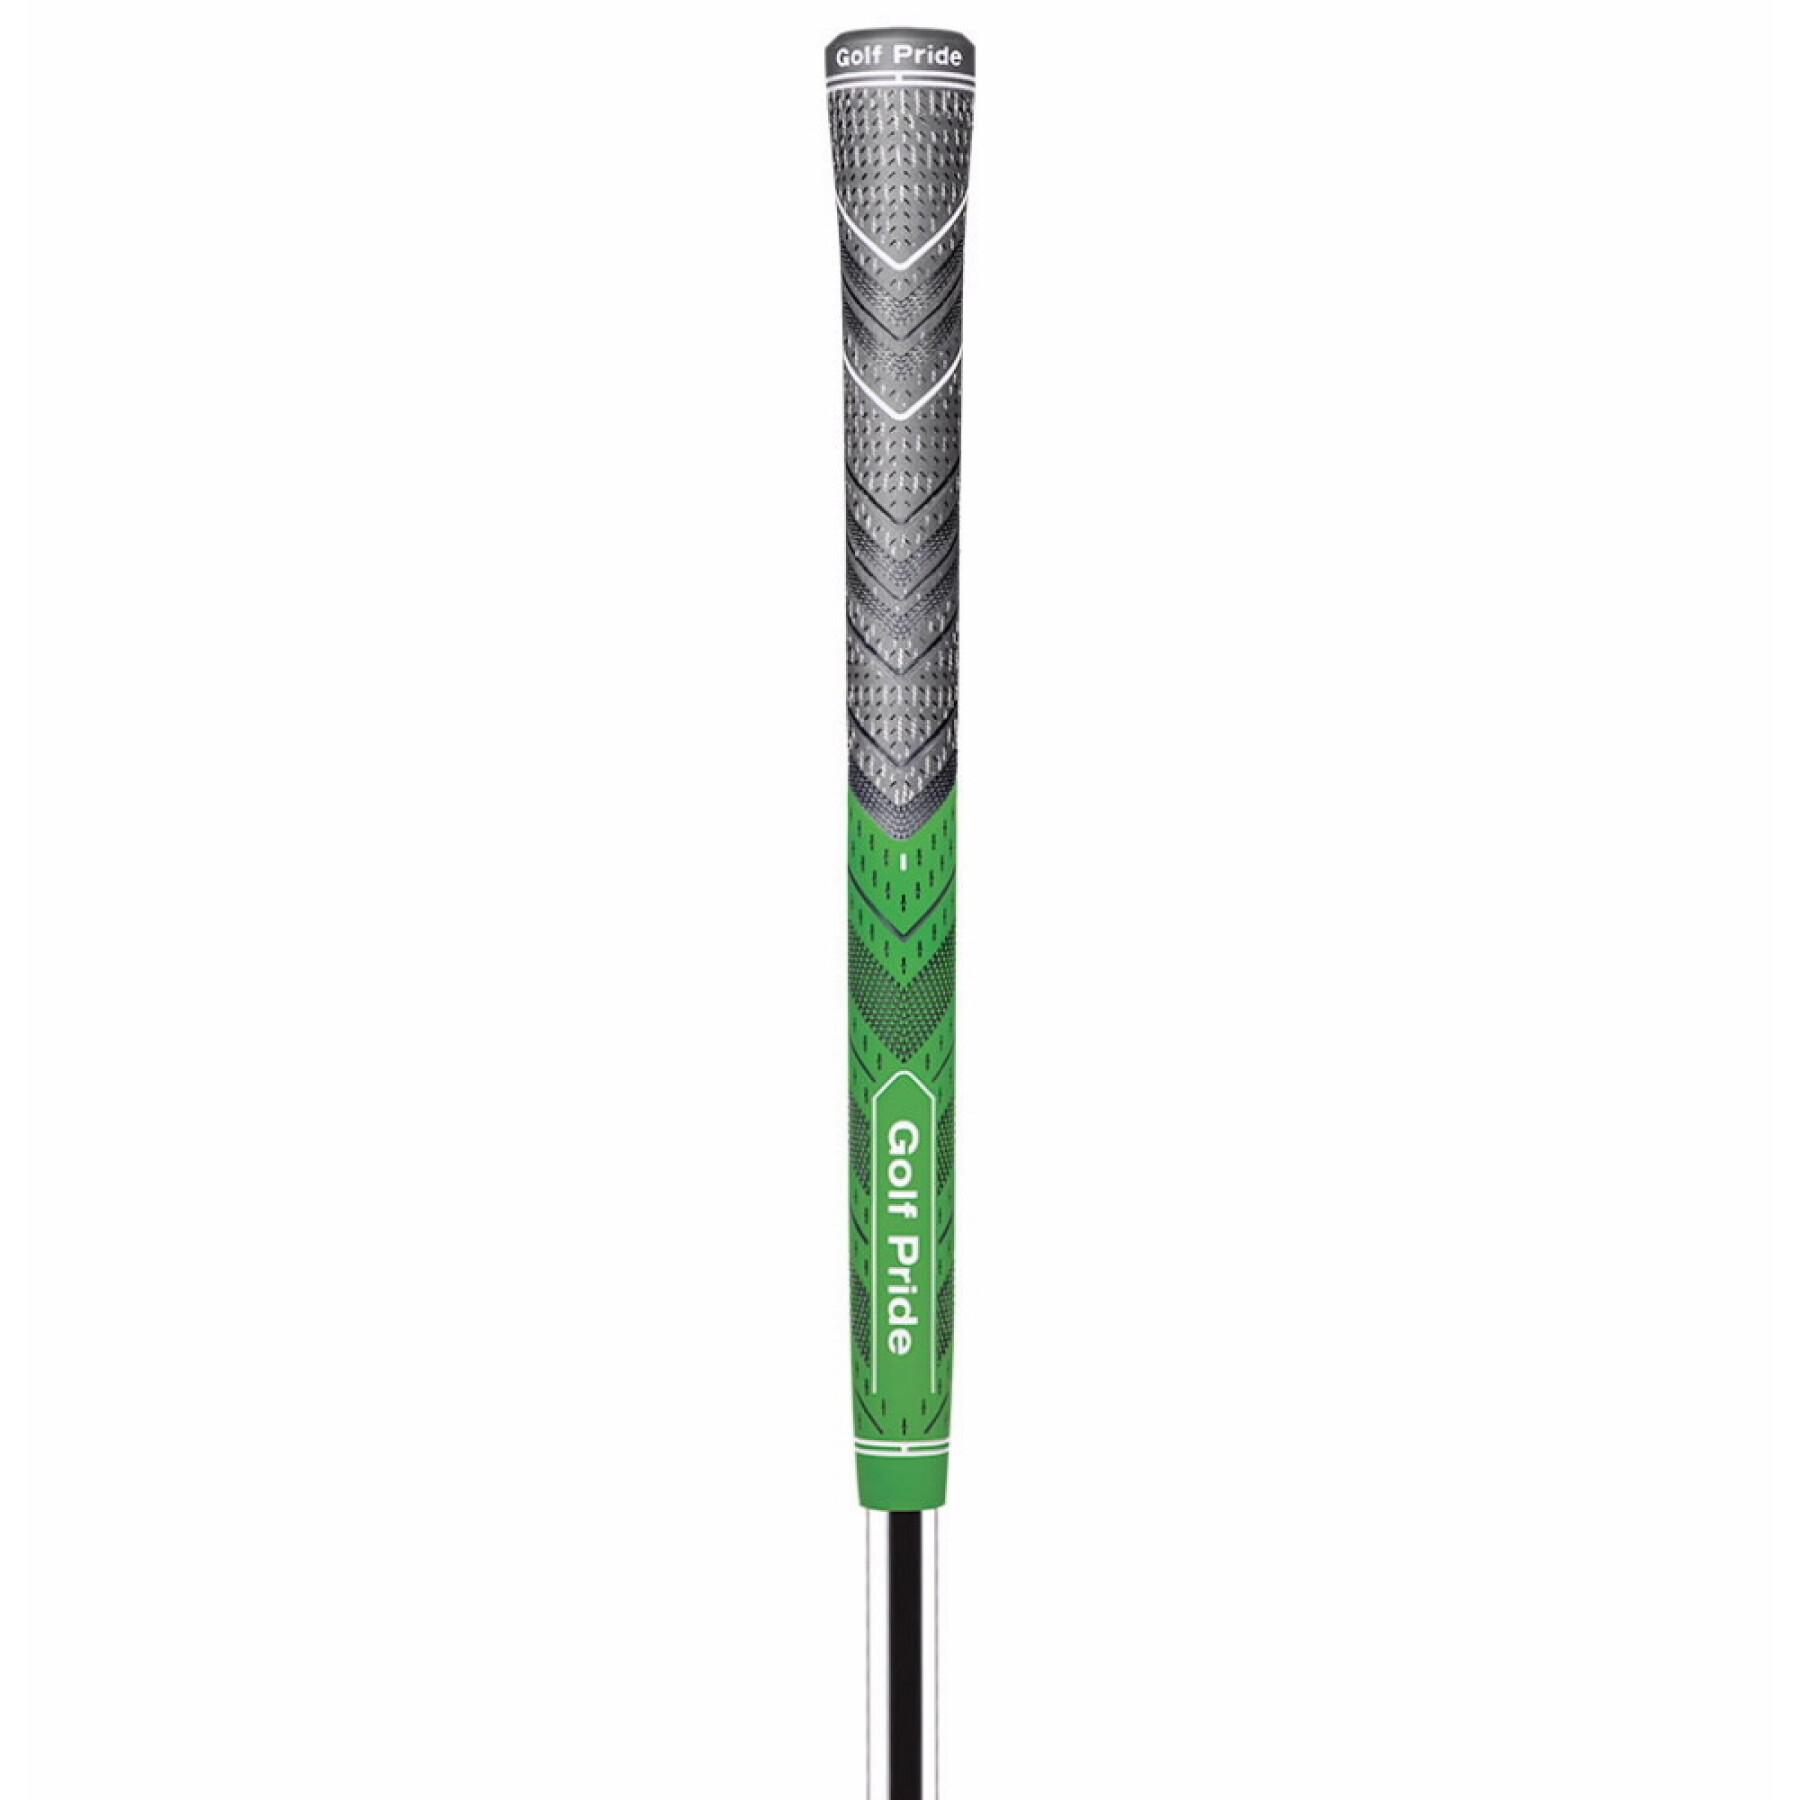 Hybrid-Griff Golf Pride cord&rubber